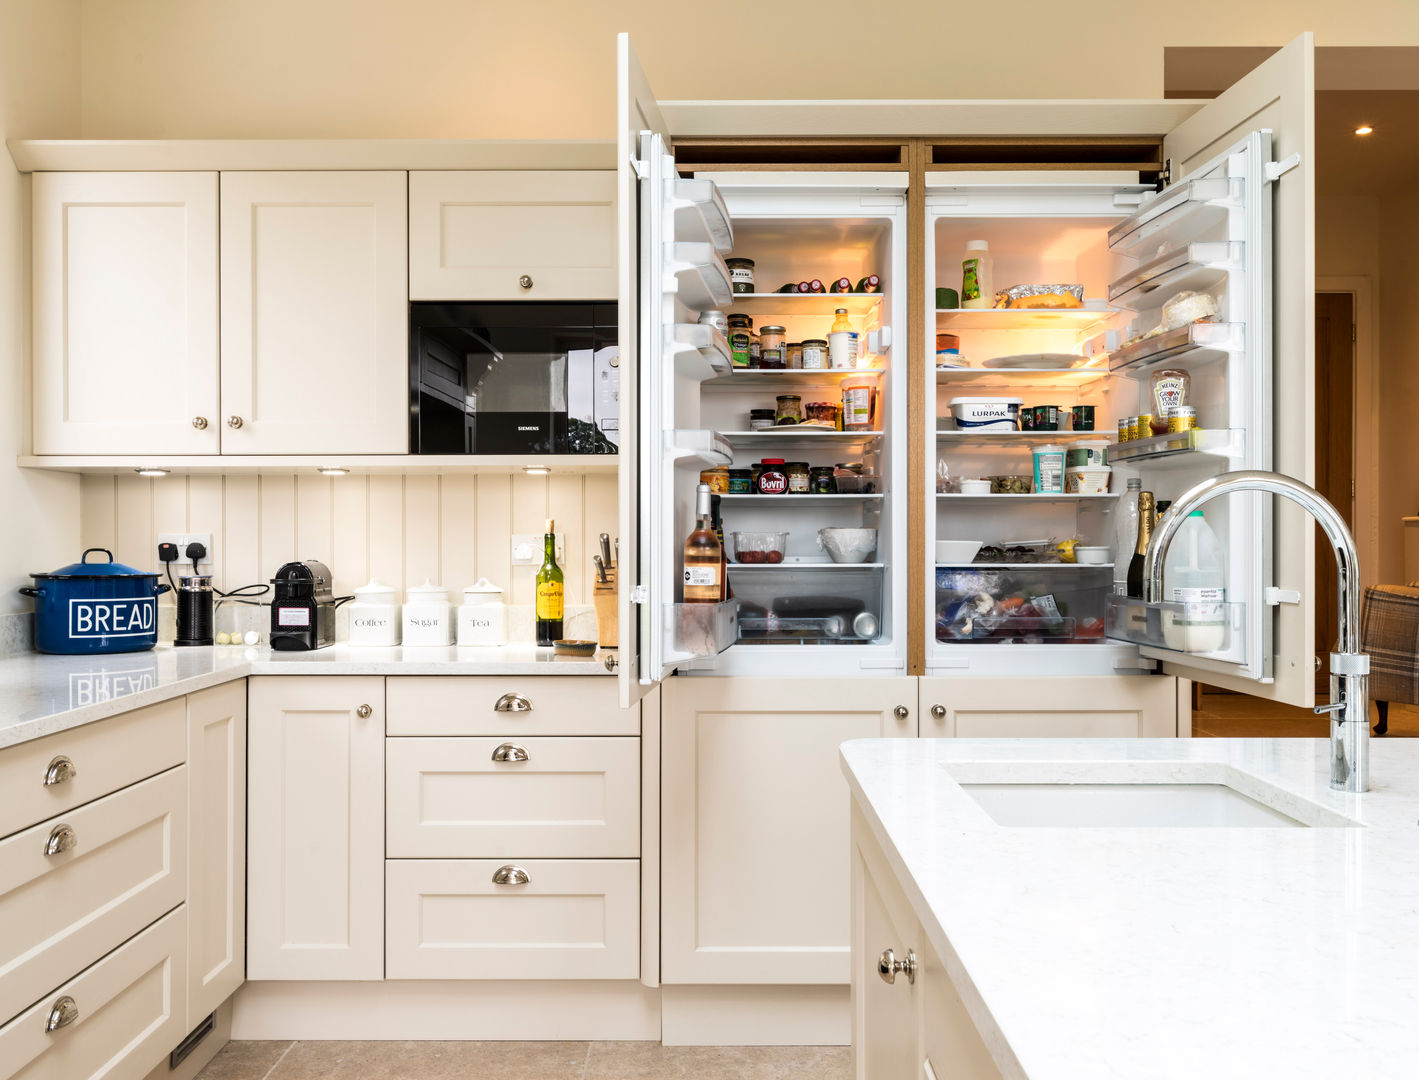 Integrated fridges John Gauld Photography Cocinas integrales Fridge/freezers,Shaker style,Kitchen island